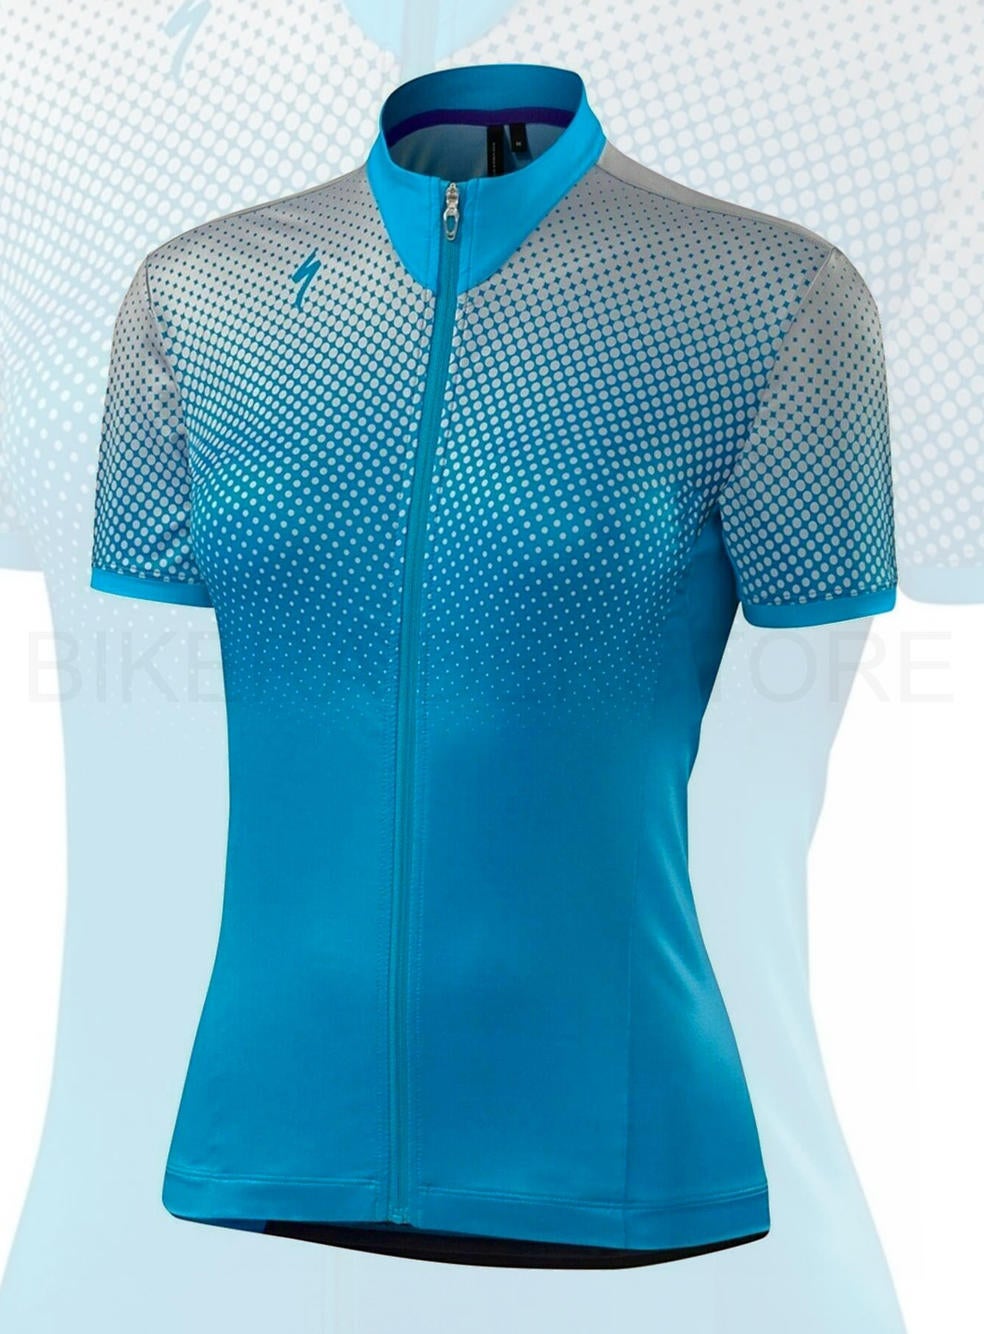 Navy Specialized Men's RBX Sport Sleeveless Cycling Jersey Neon Blue Medium 